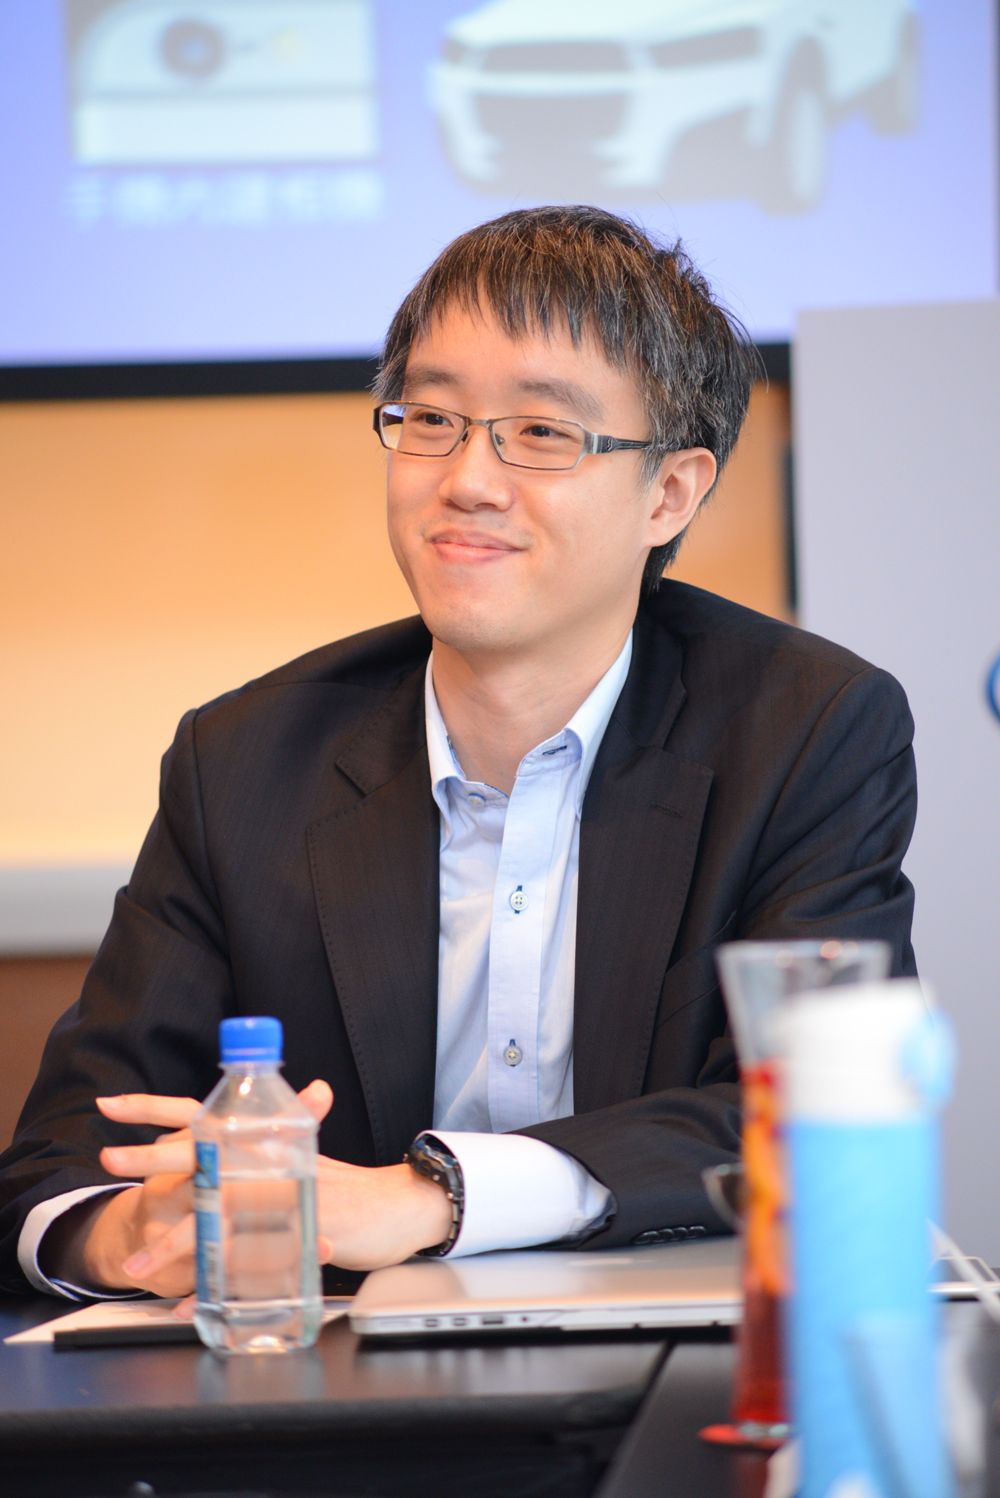 Prof. Michael Tsai